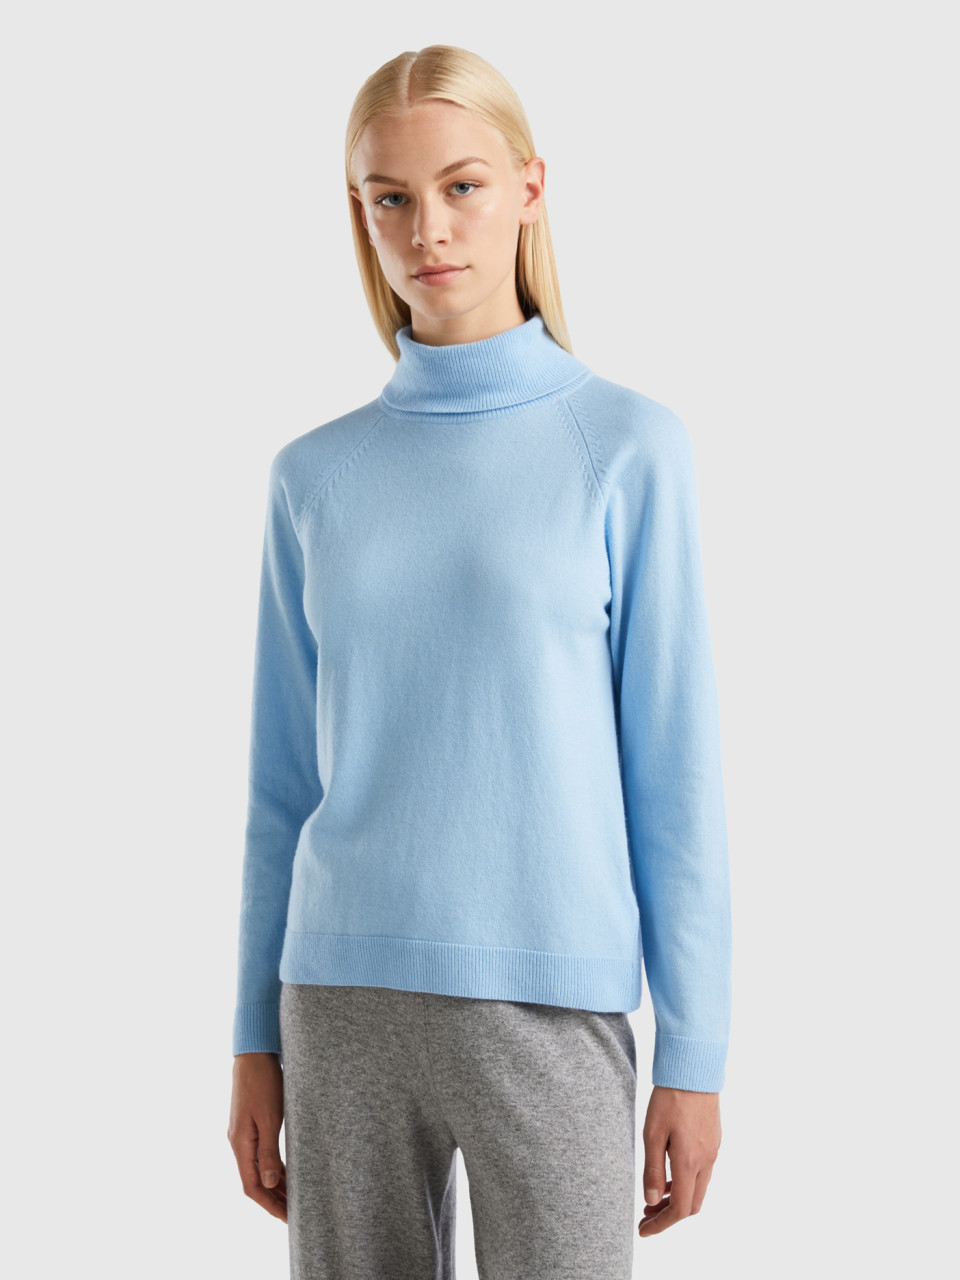 Benetton, Light Blue Turtleneck Sweater In Cashmere And Wool Blend, Light Blue, Women